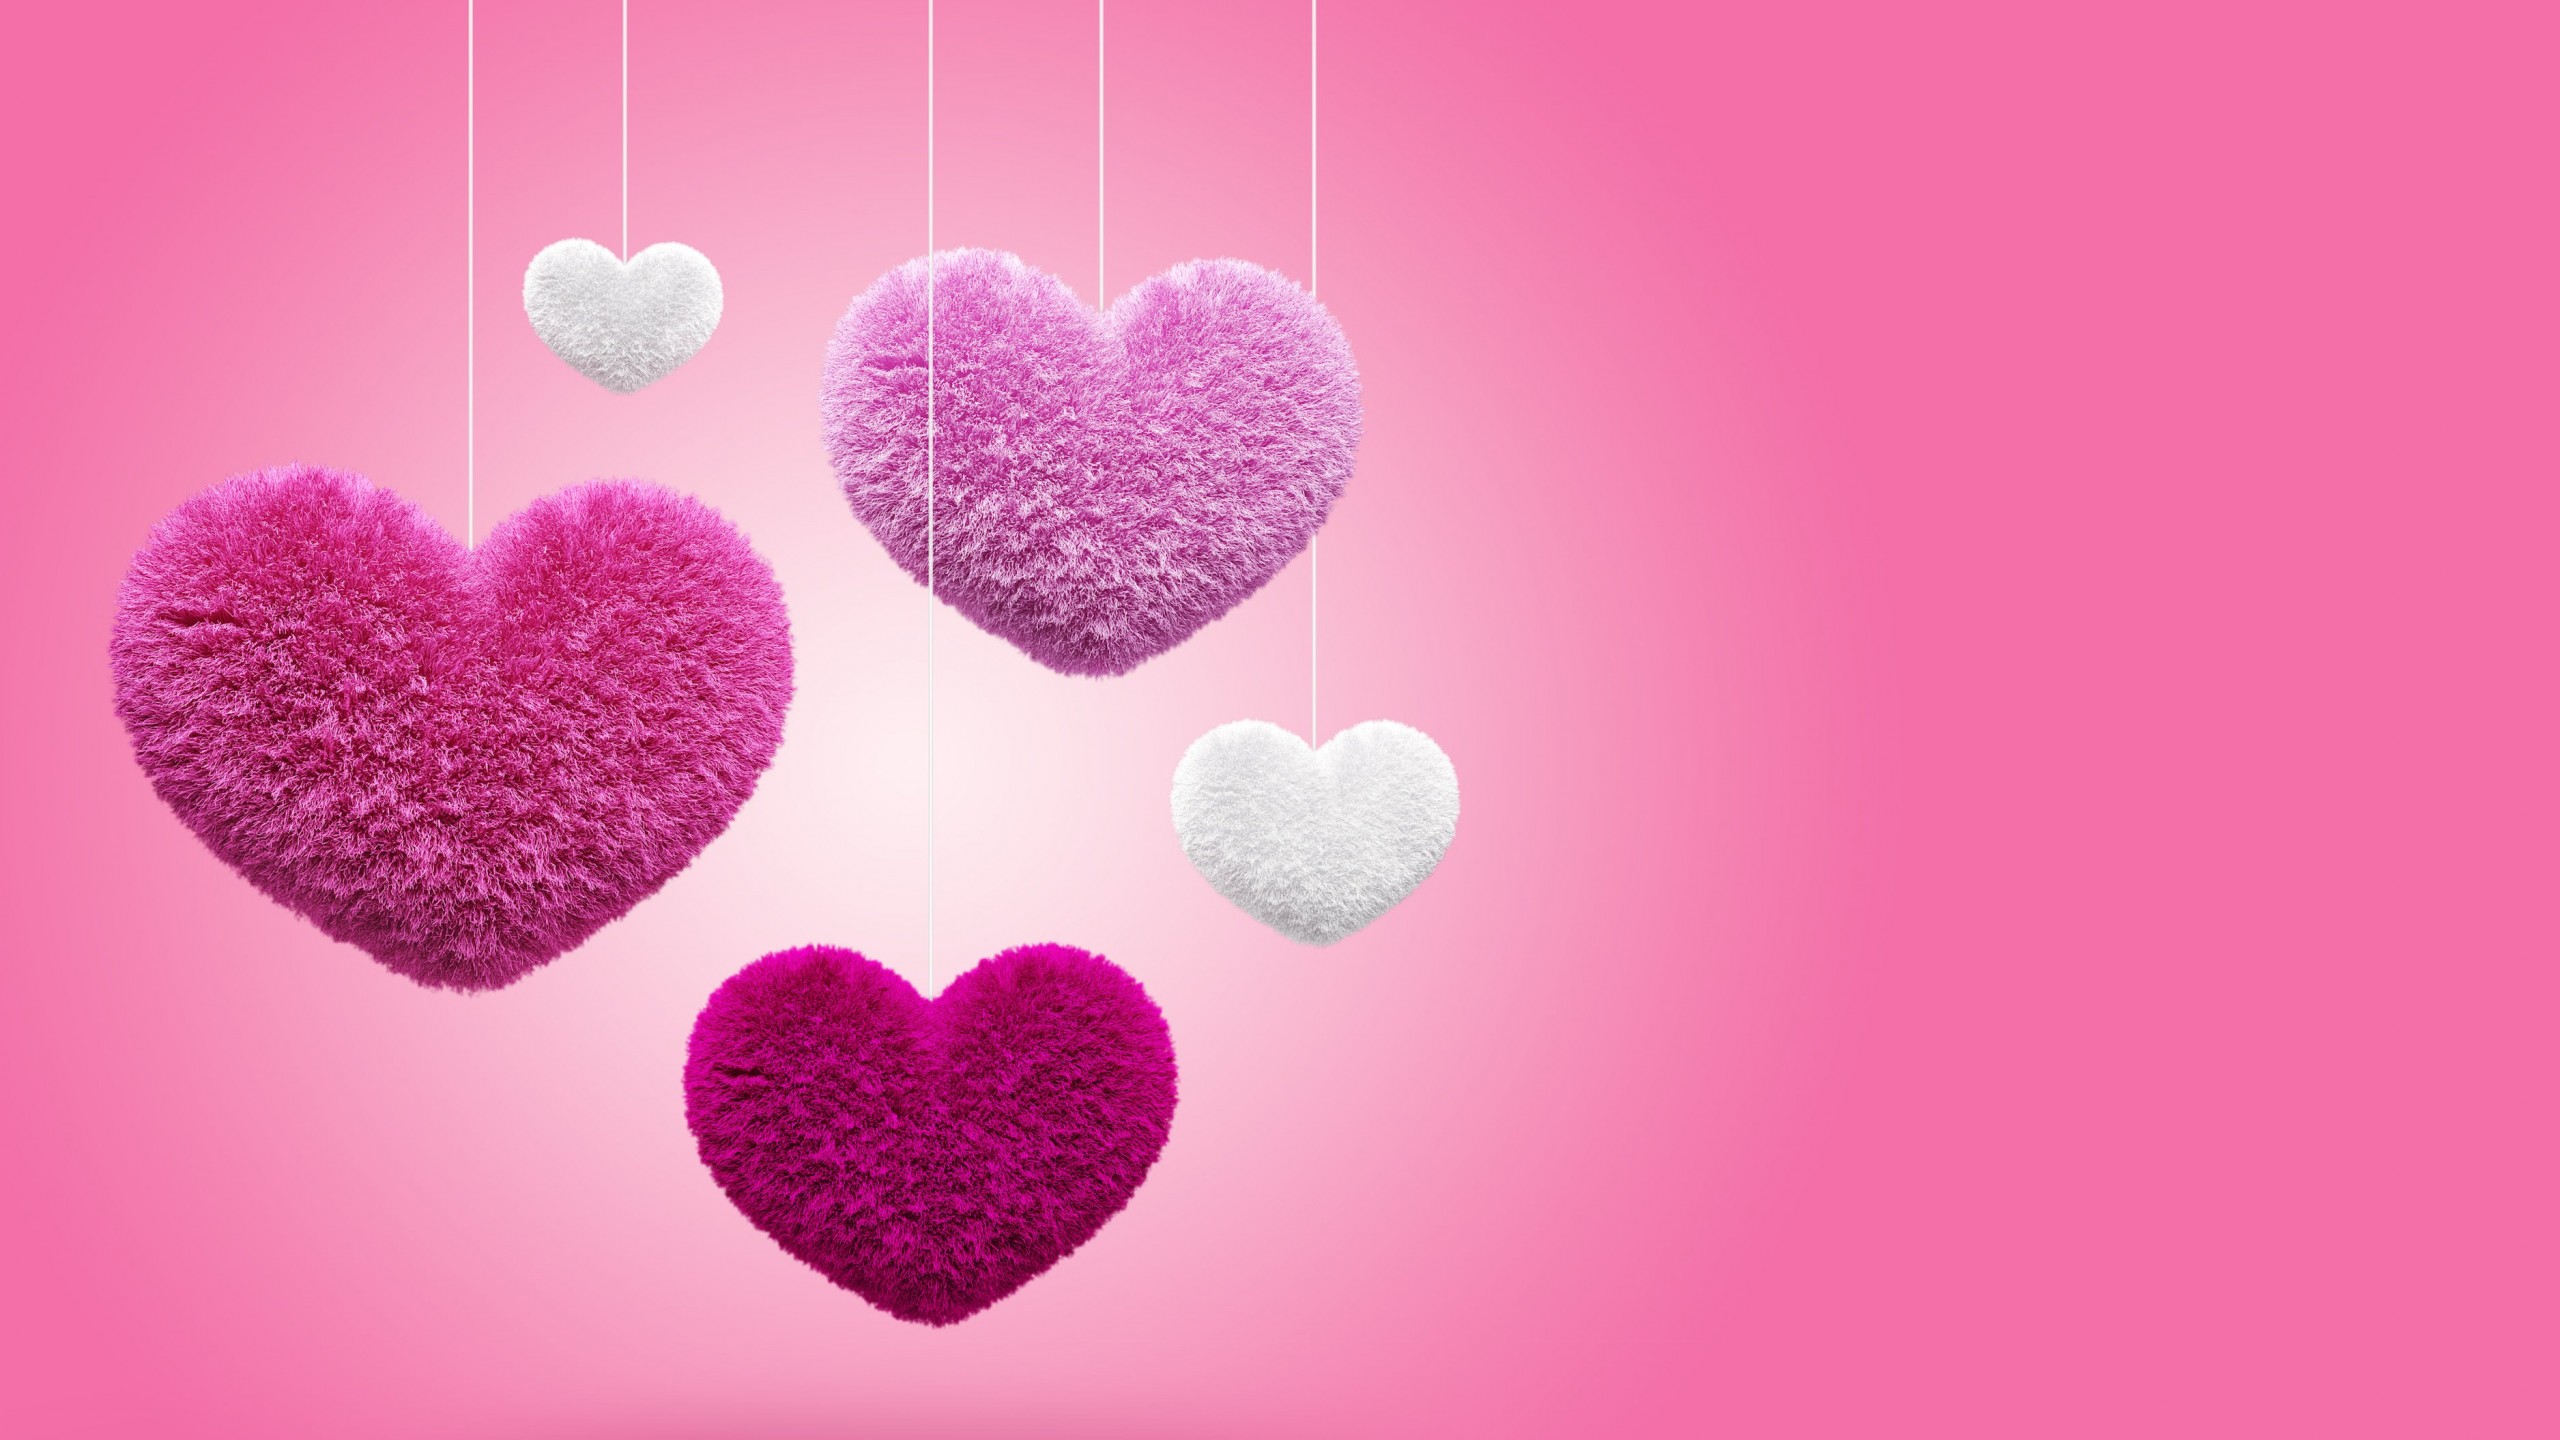 Fluffy Hearts Wallpaper for Social Media YouTube Channel Art